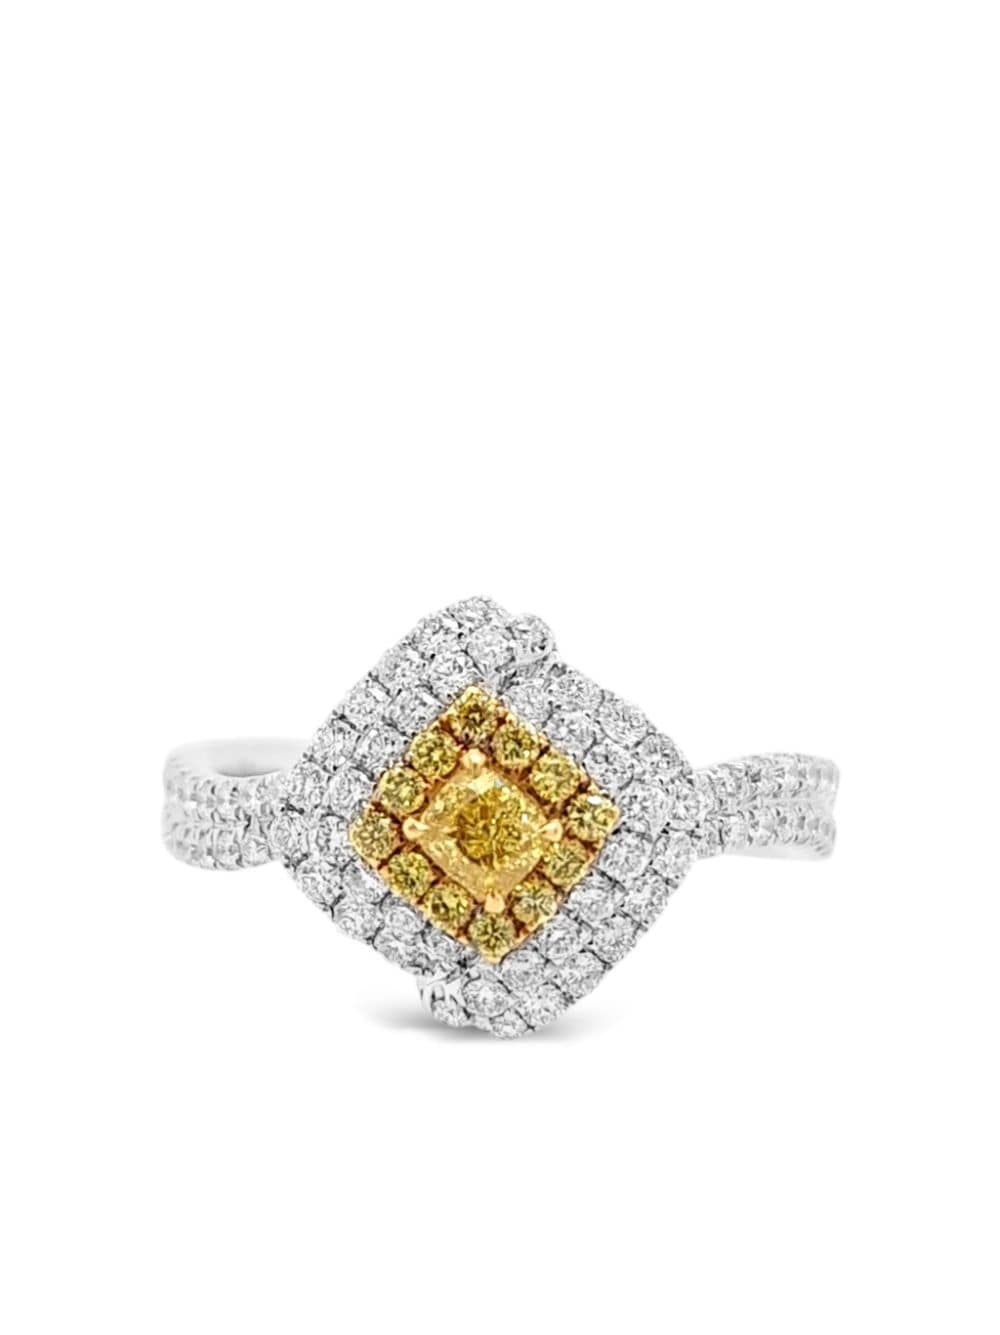 HYT Jewelry 18kt yellow gold and platinum Fancy Intense diamond ring - Silver von HYT Jewelry